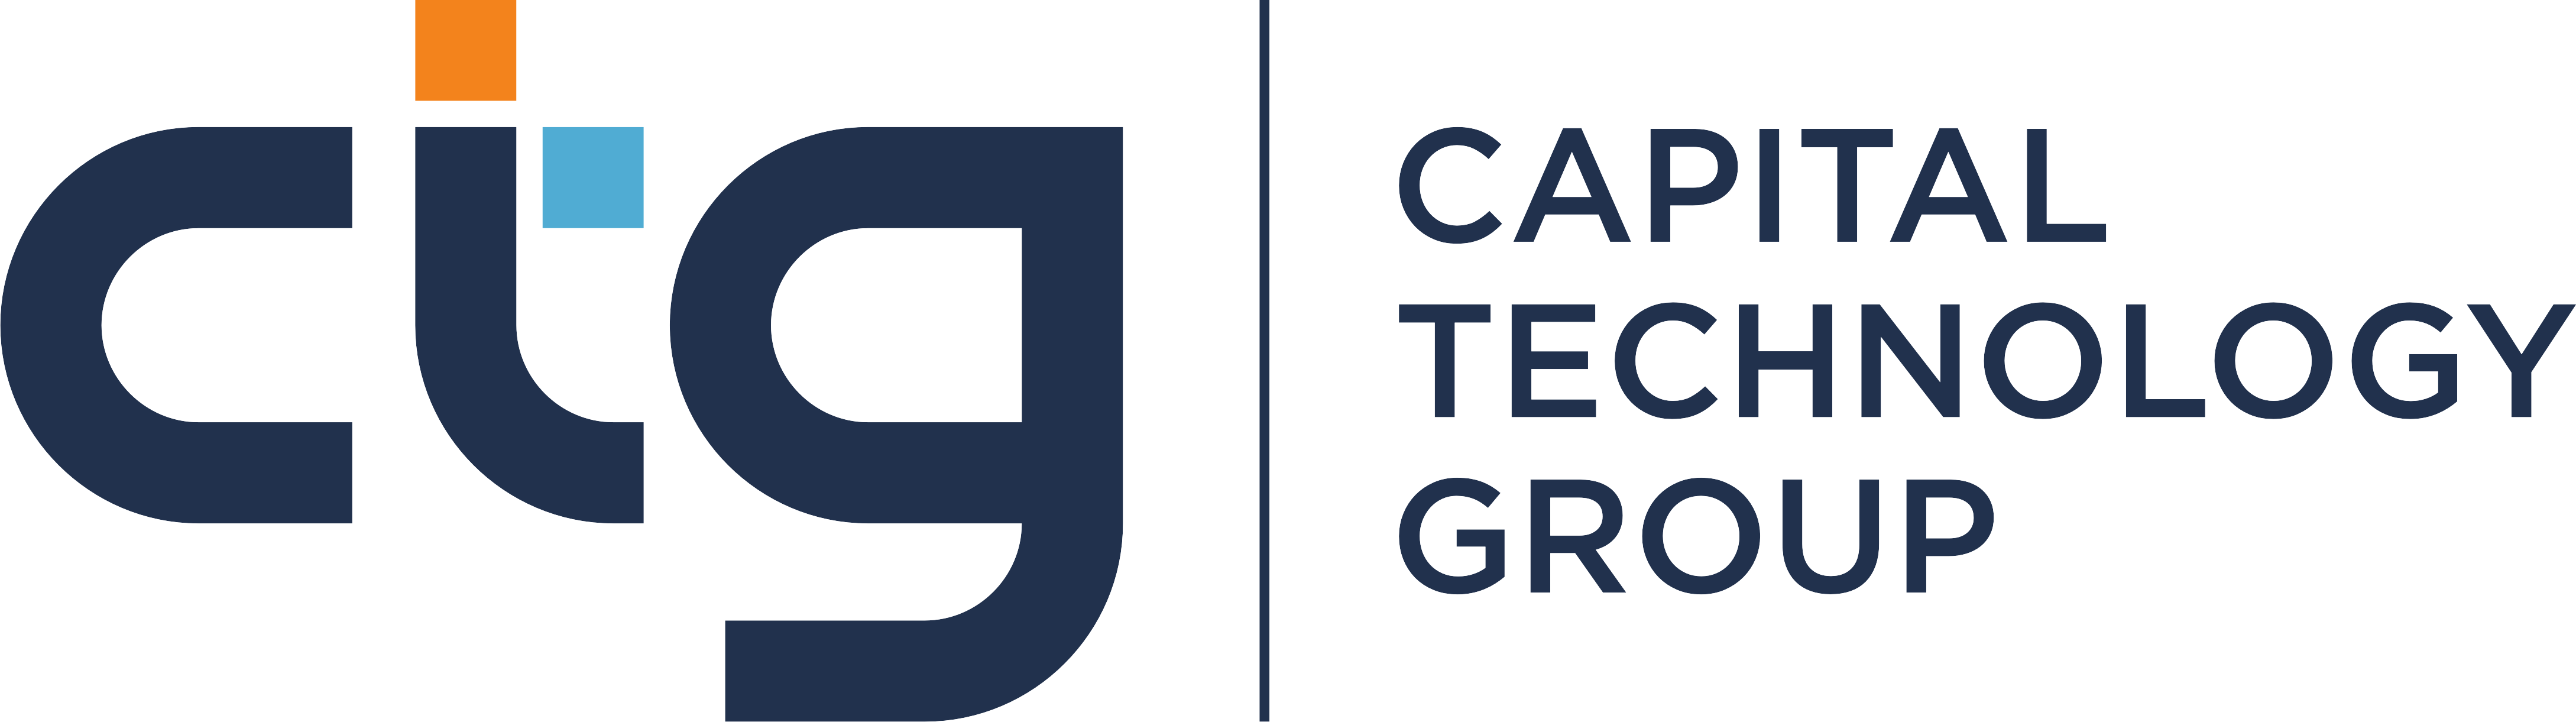 Capital Technology Group